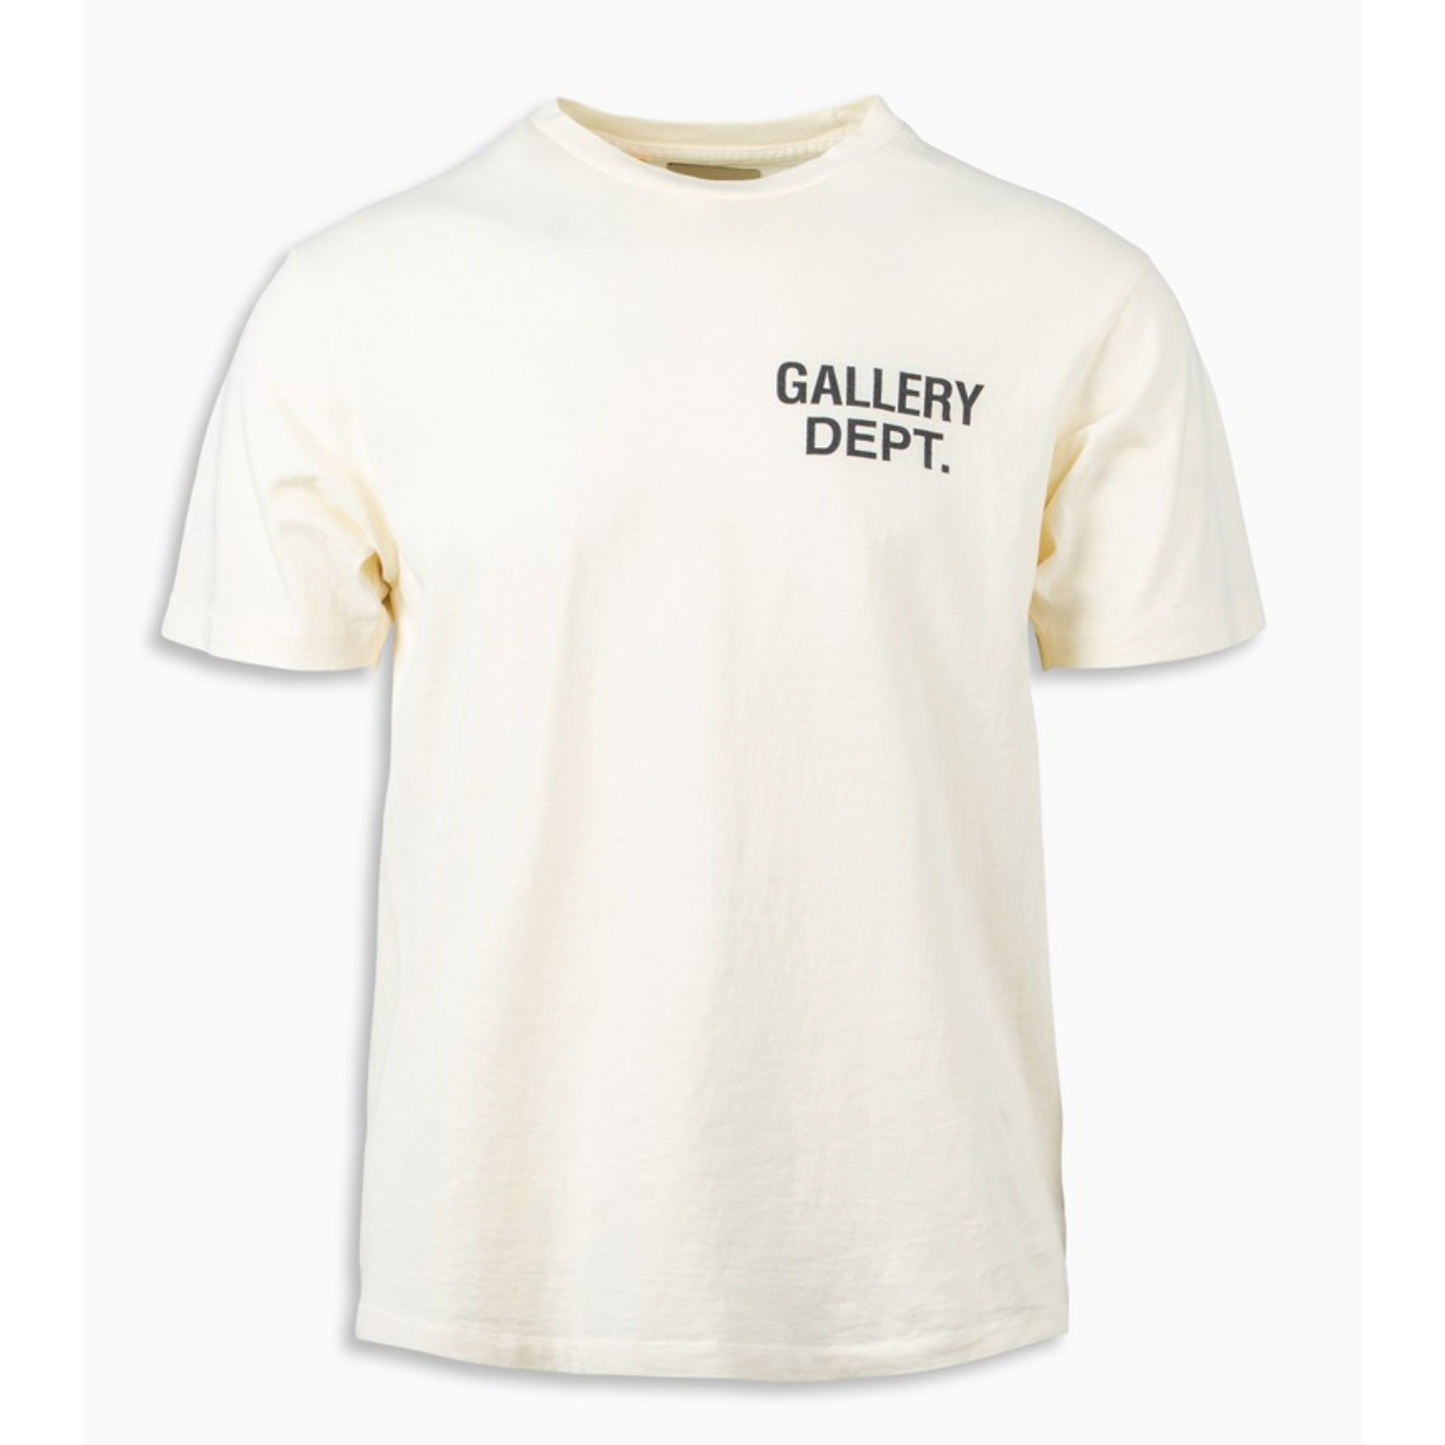 GALLERY DEPT. SOUVENIR T-SHIRT CREAM/ORANGE by GALLERY DEPT. from £212.99